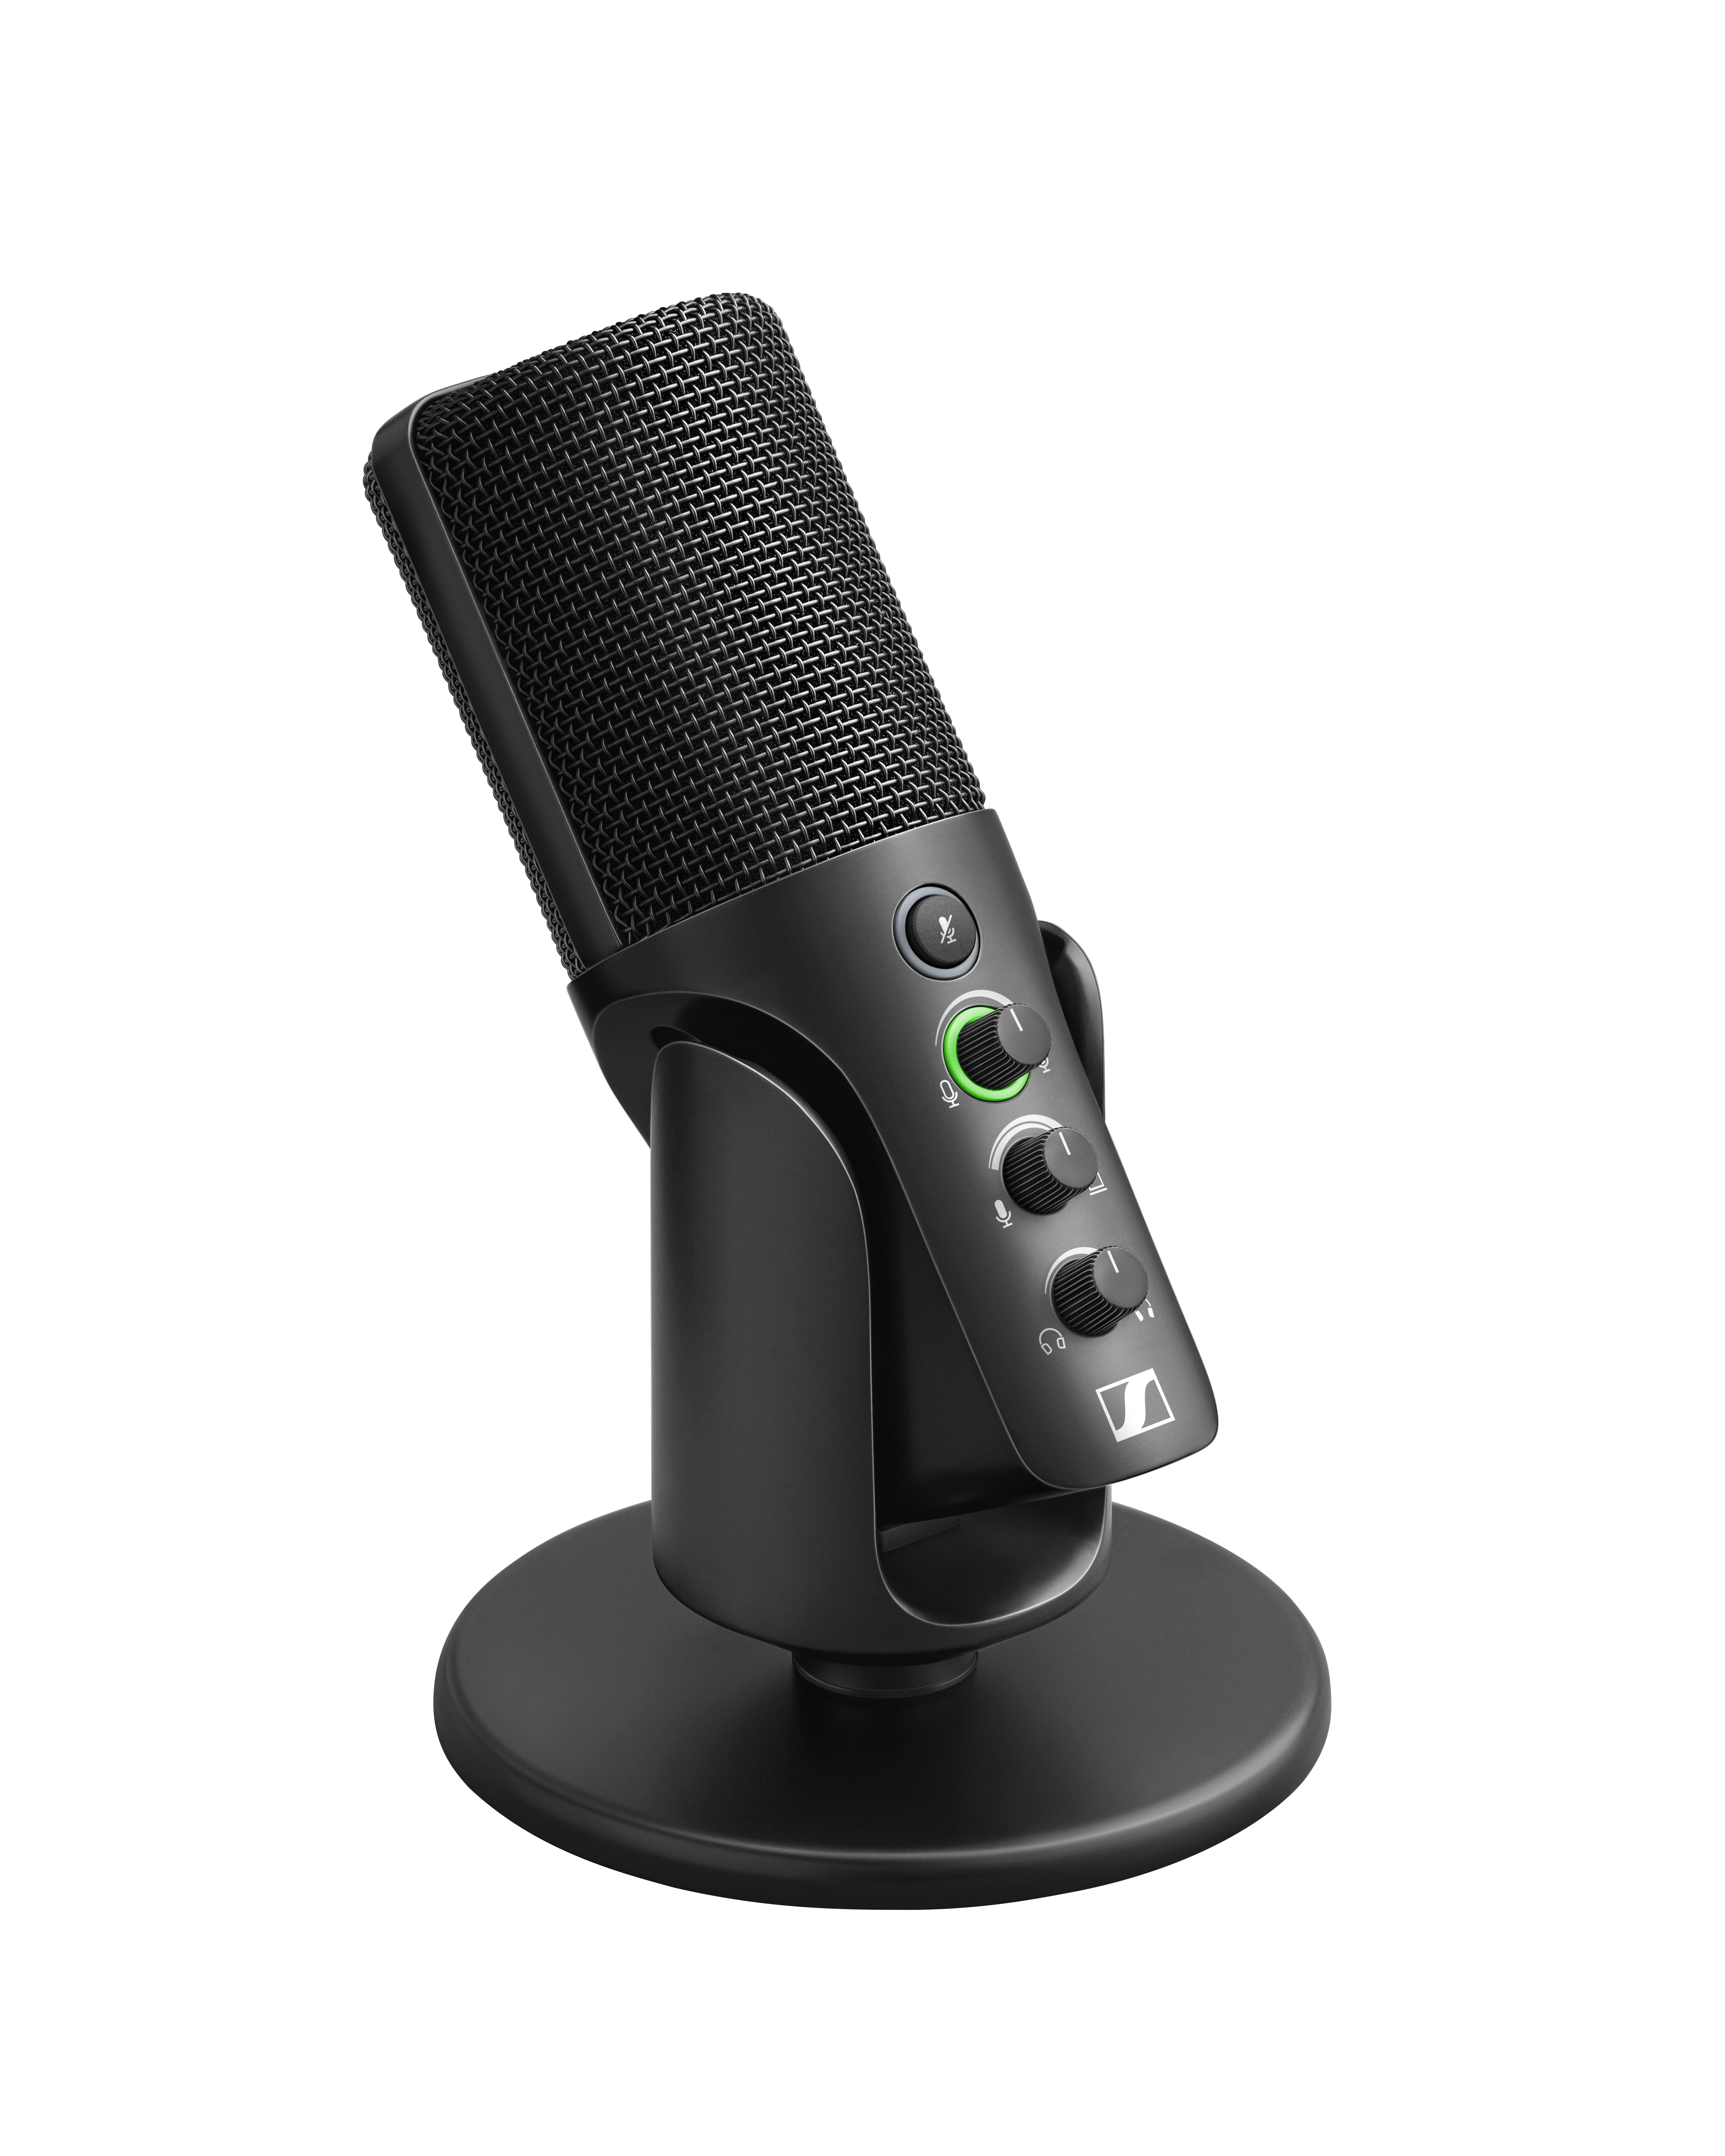 Plug-and-play: the Profile USB microphone